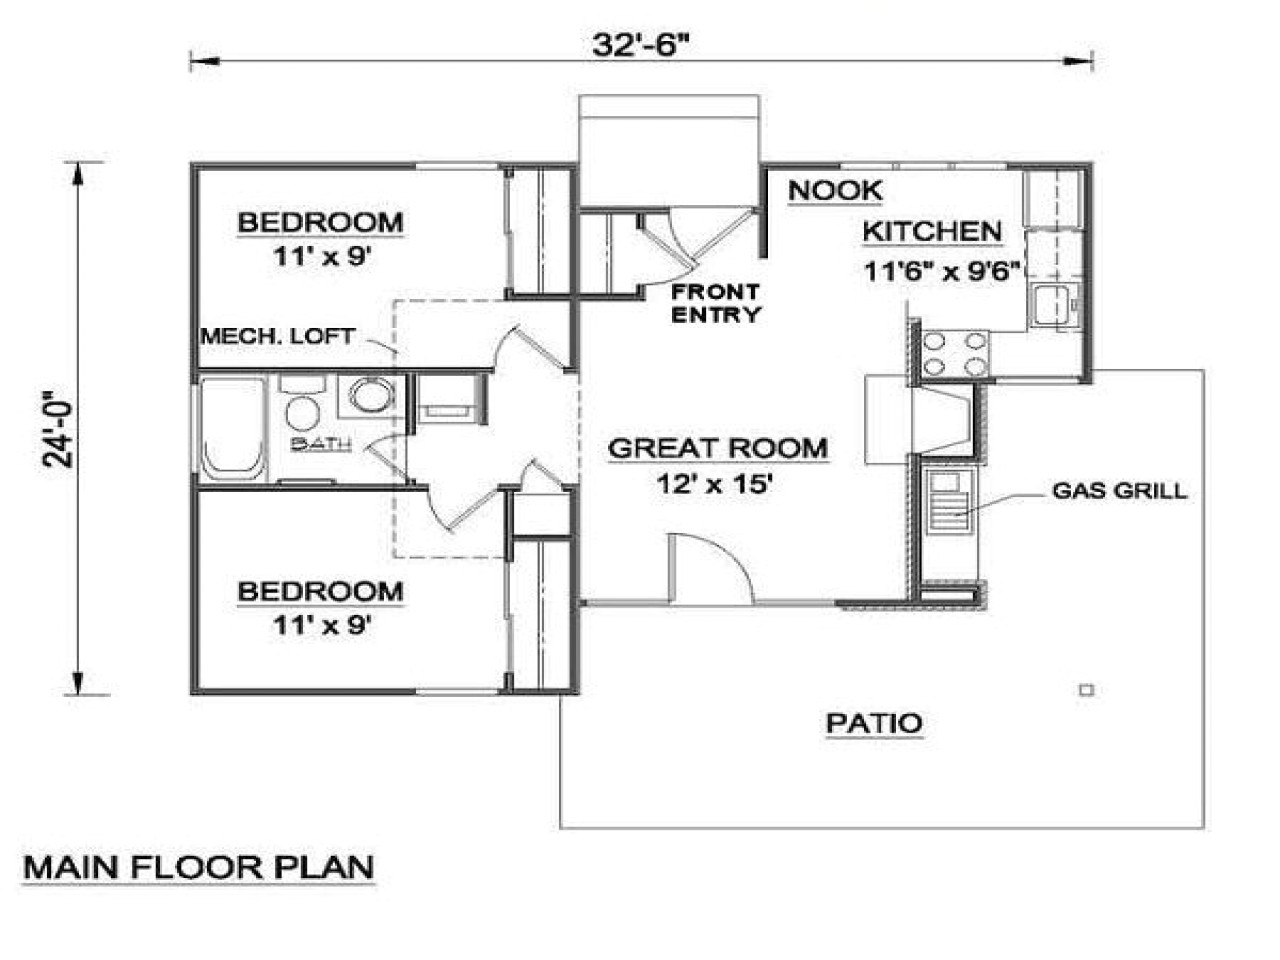 a97b78ce9e920be1 700 sq ft house plans 700 sq ft apartment